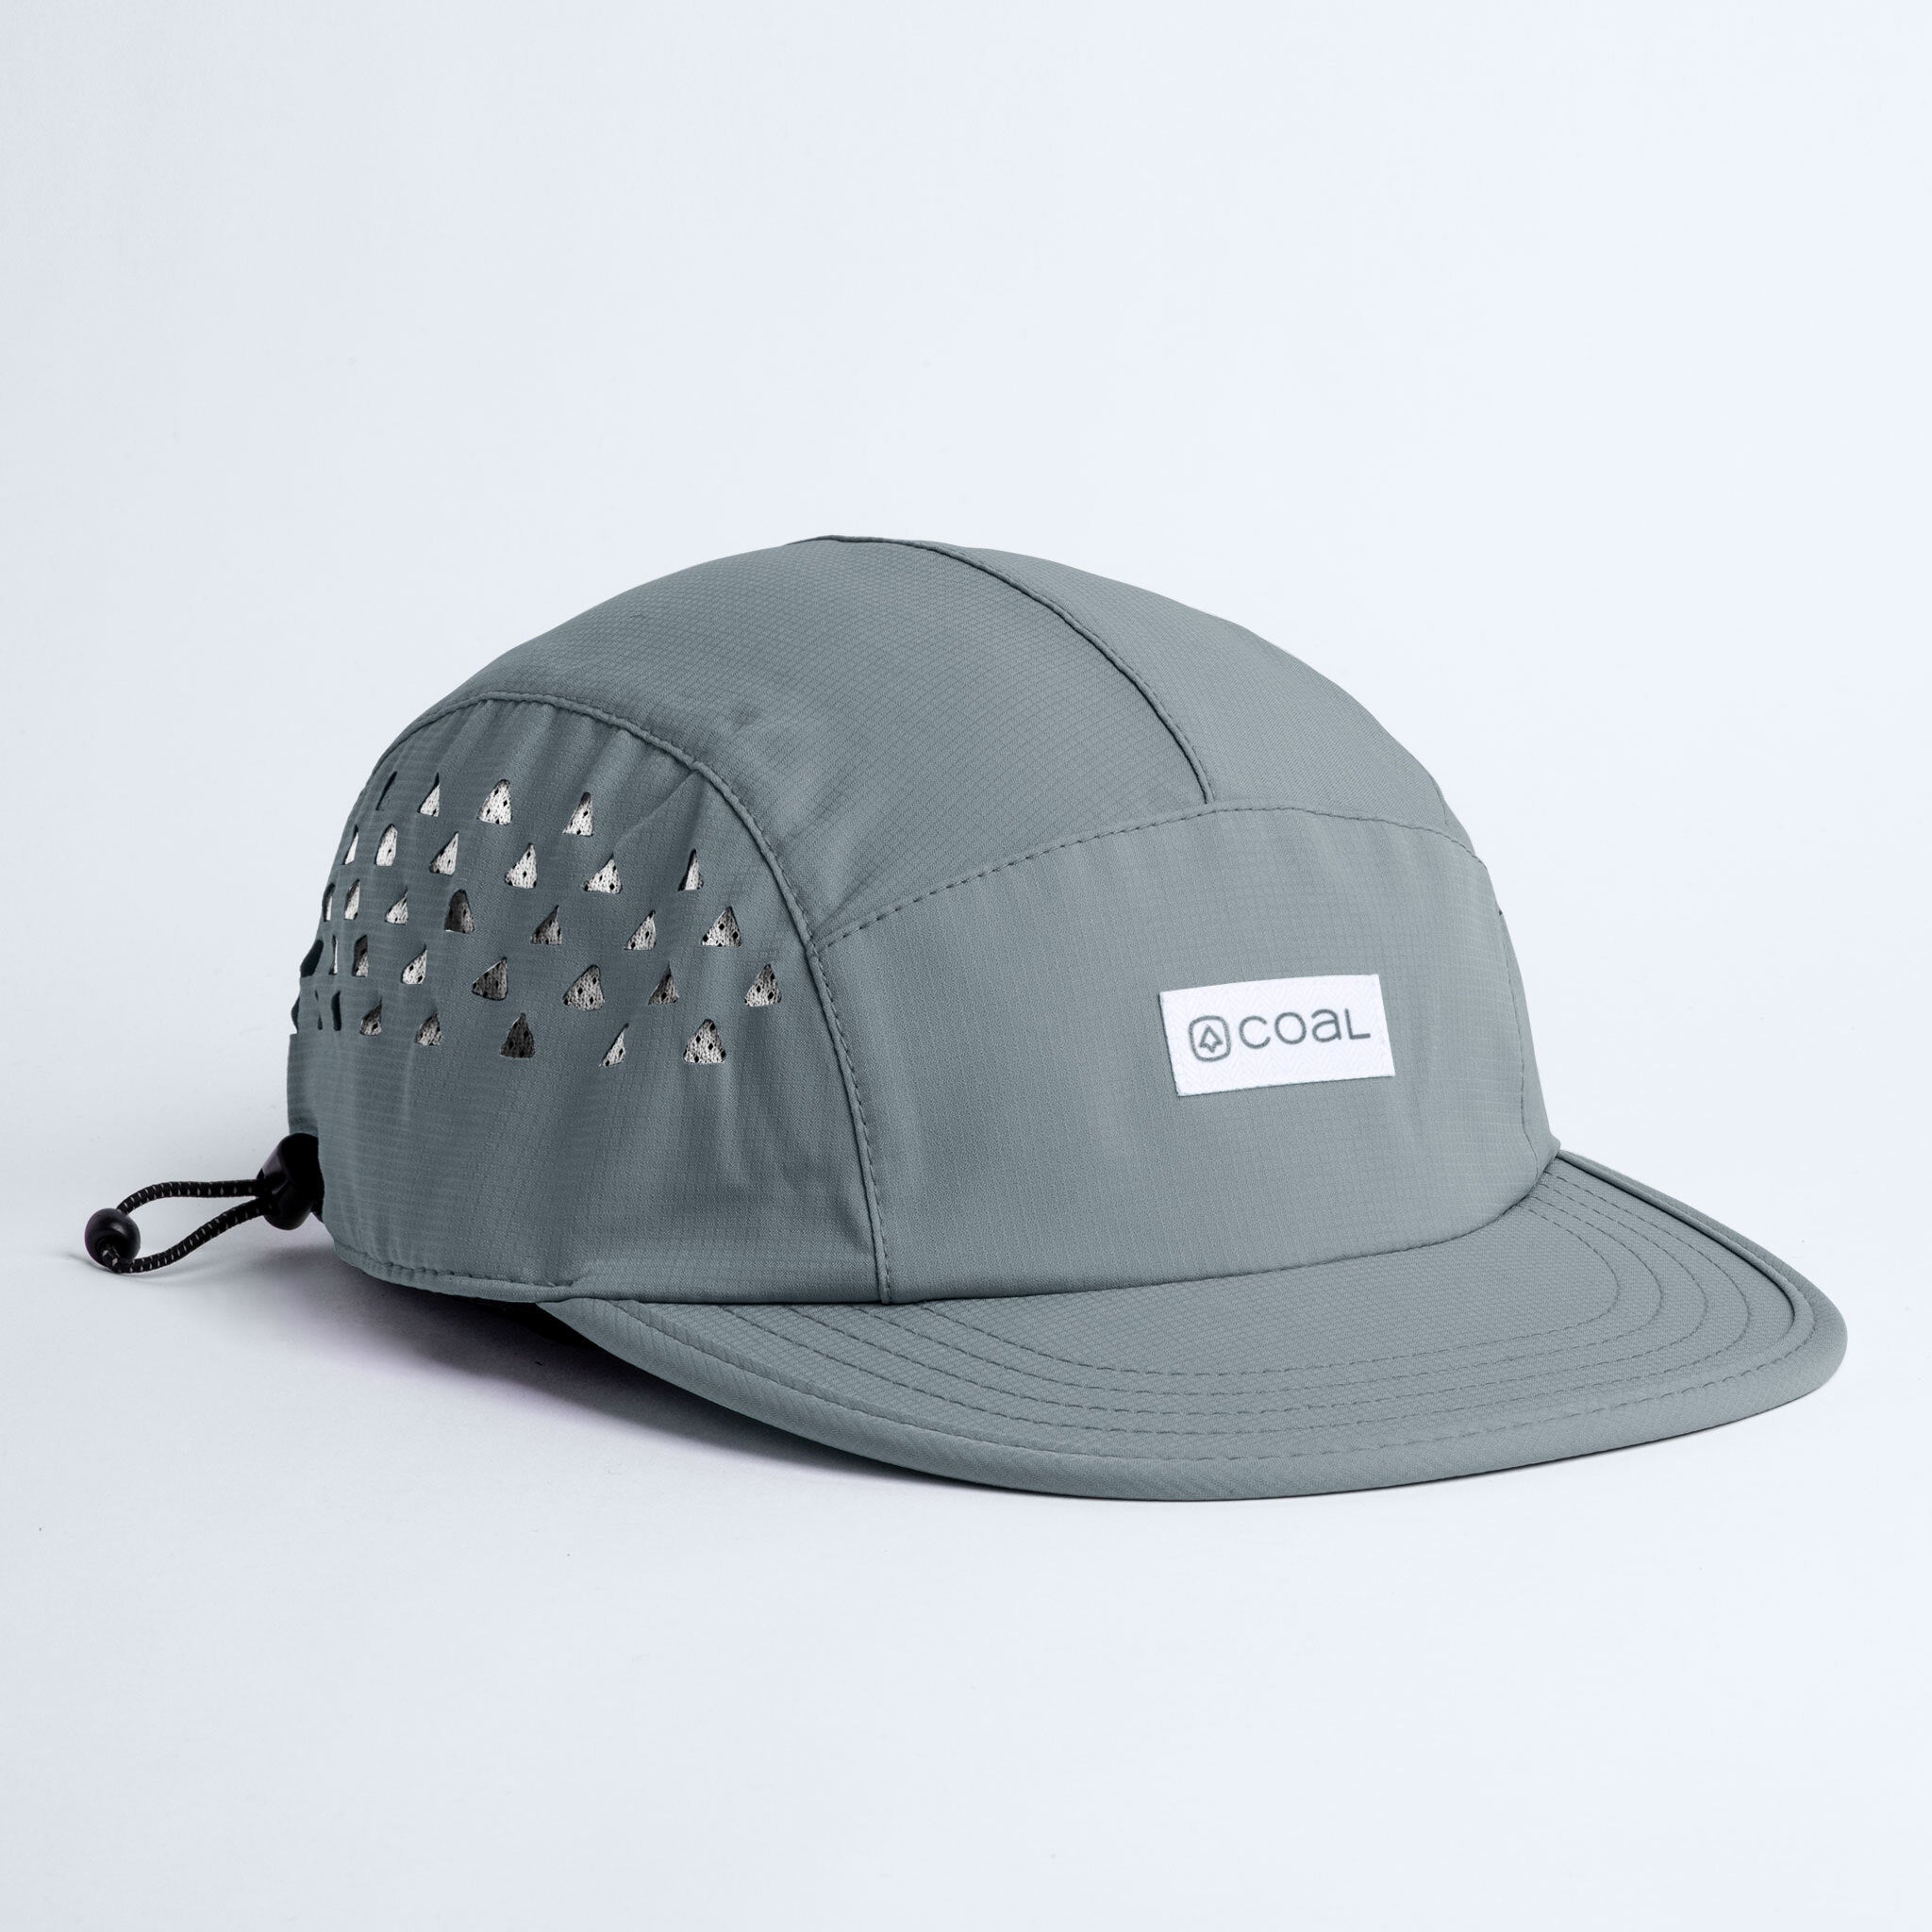 RAINBOX // Sustainably Sourced, Custom Made Hats